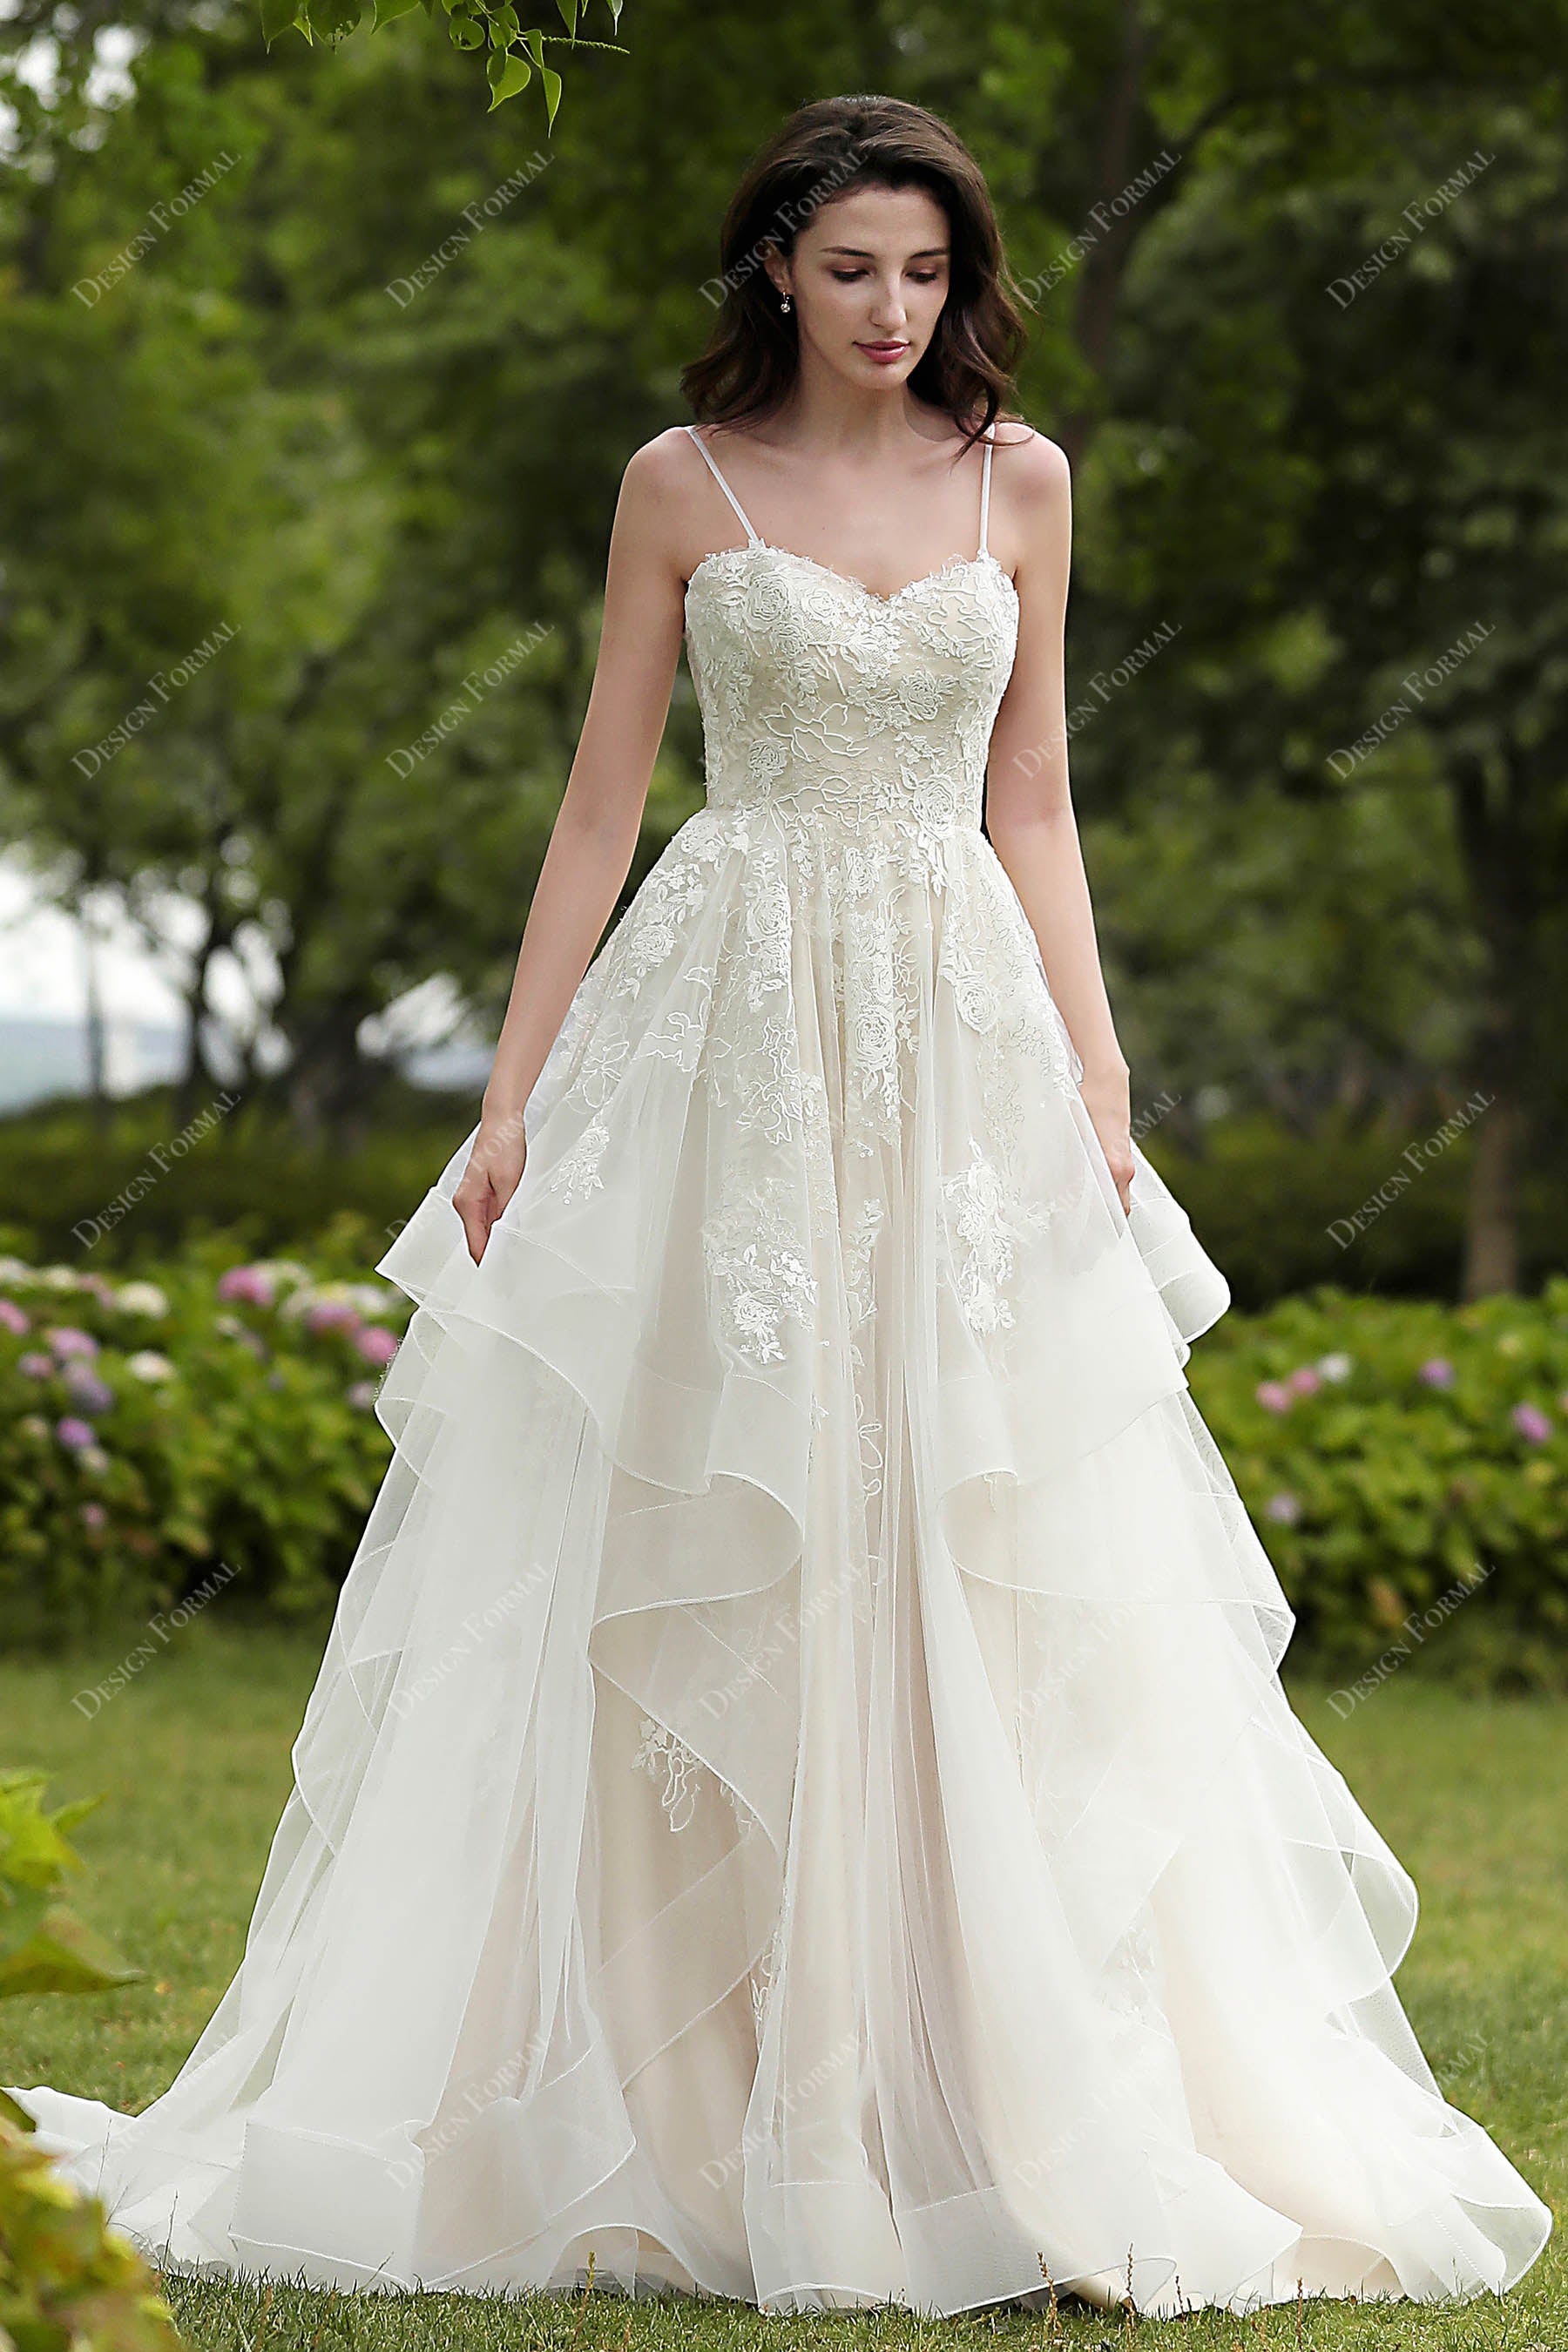 Romantic Lace Tulle Flounce A-line Wedding Dress